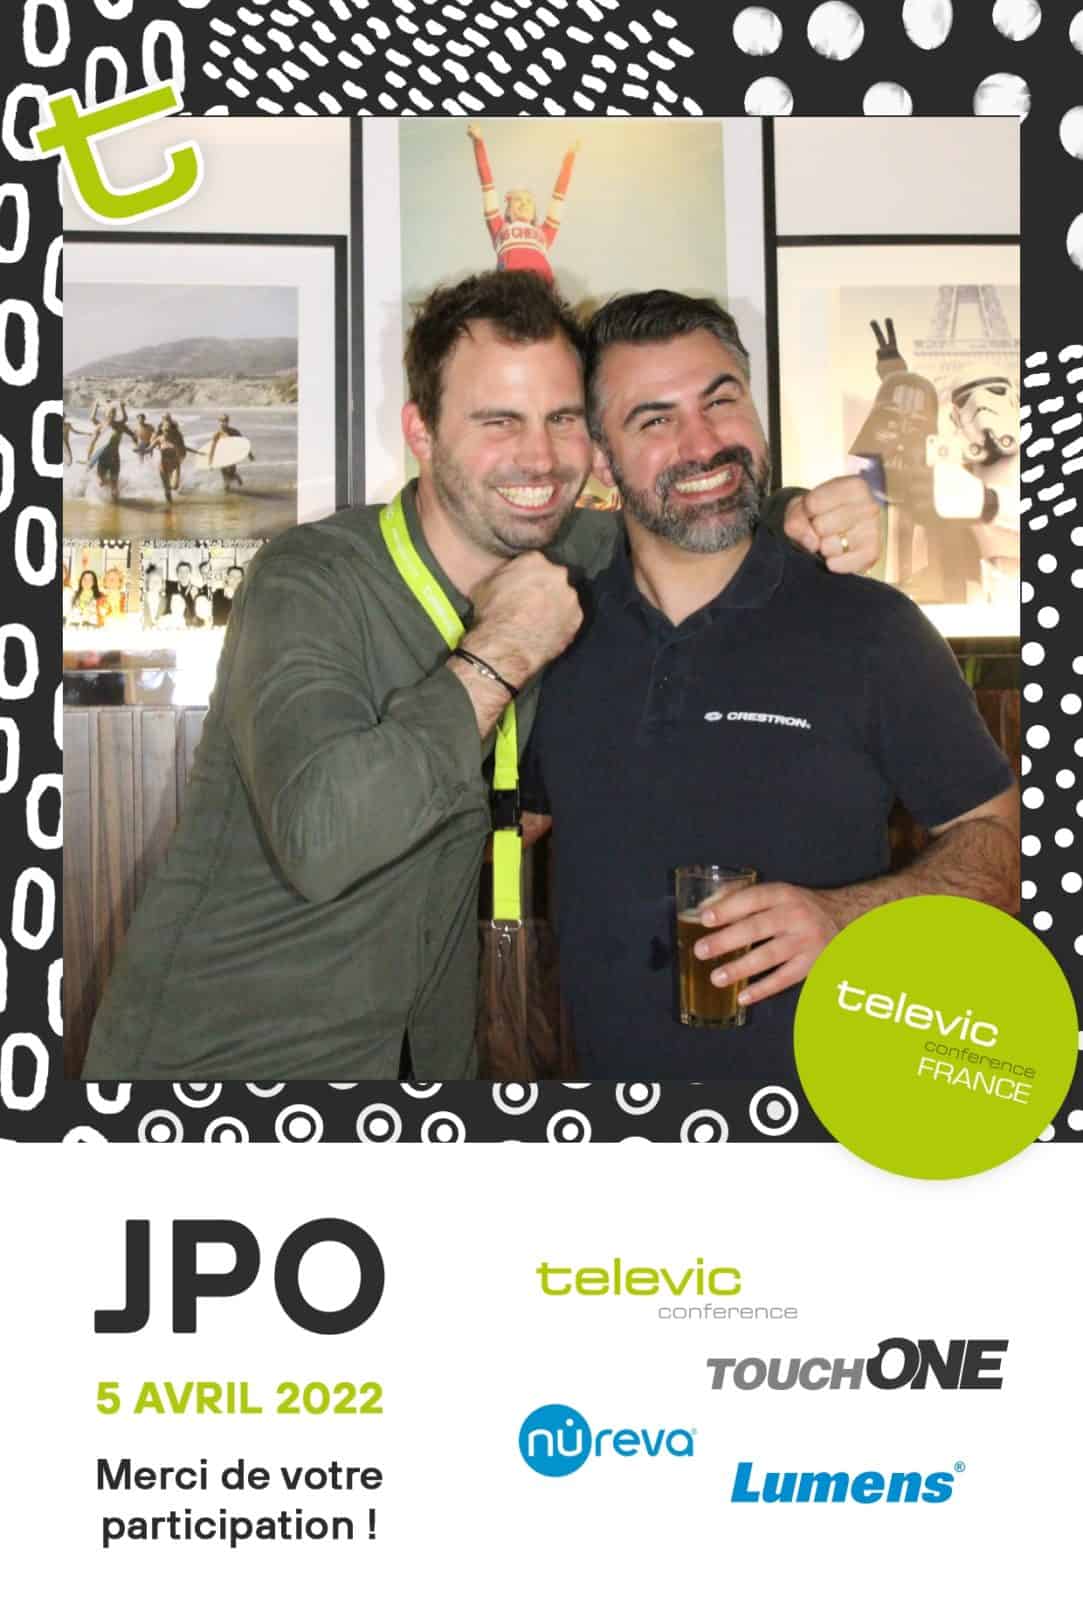 Borne Photo JPO Televic 29